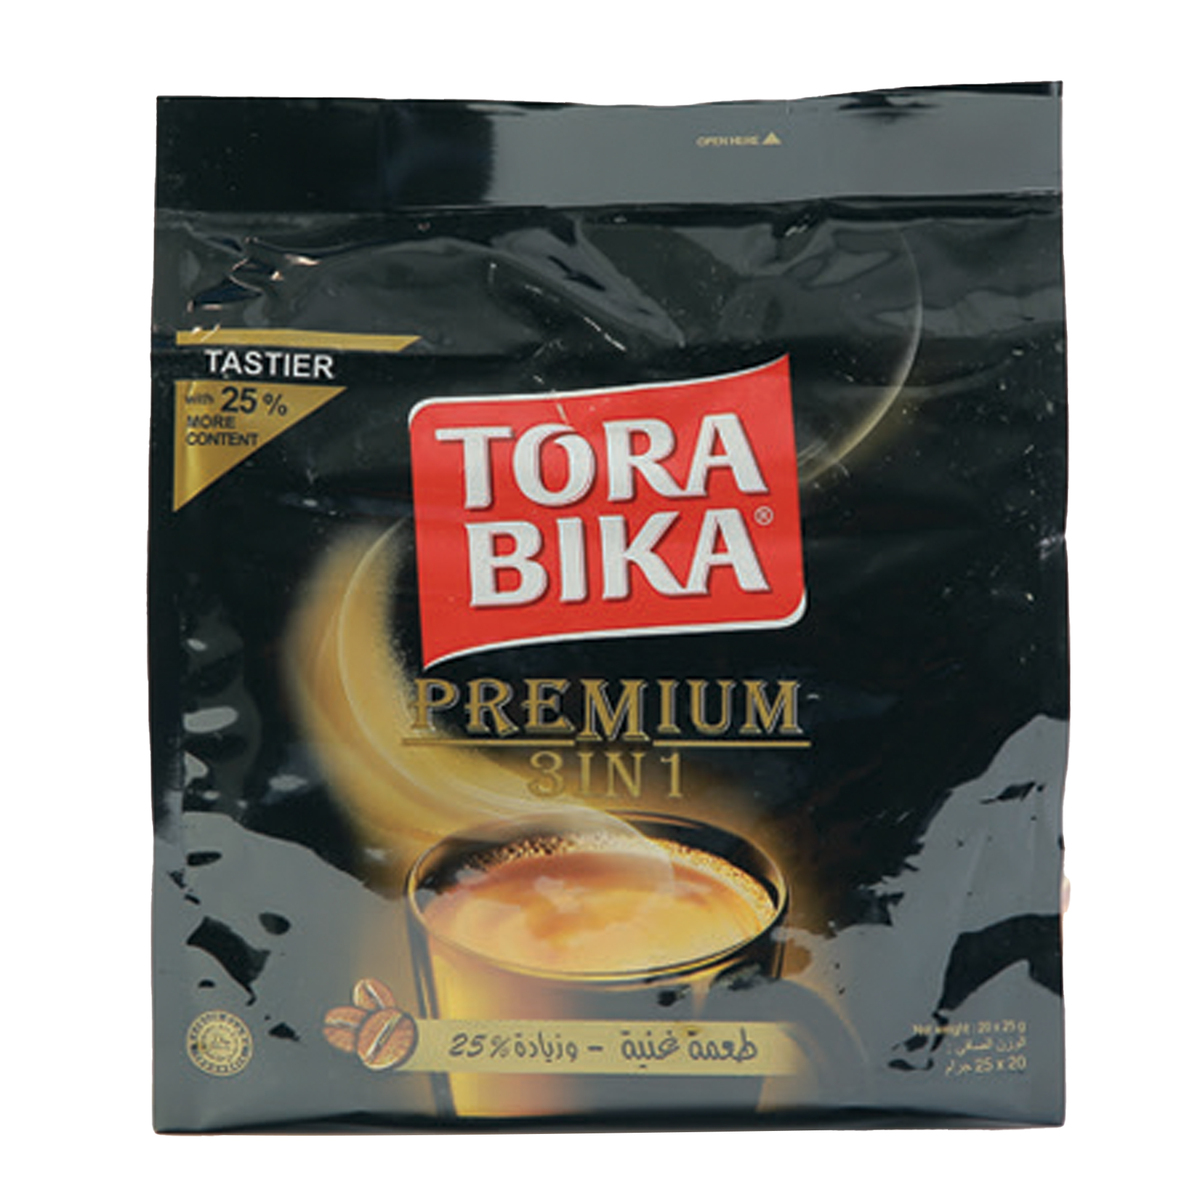 Tora Bika Premium 3in1 Instant Coffee 20 x 25 g